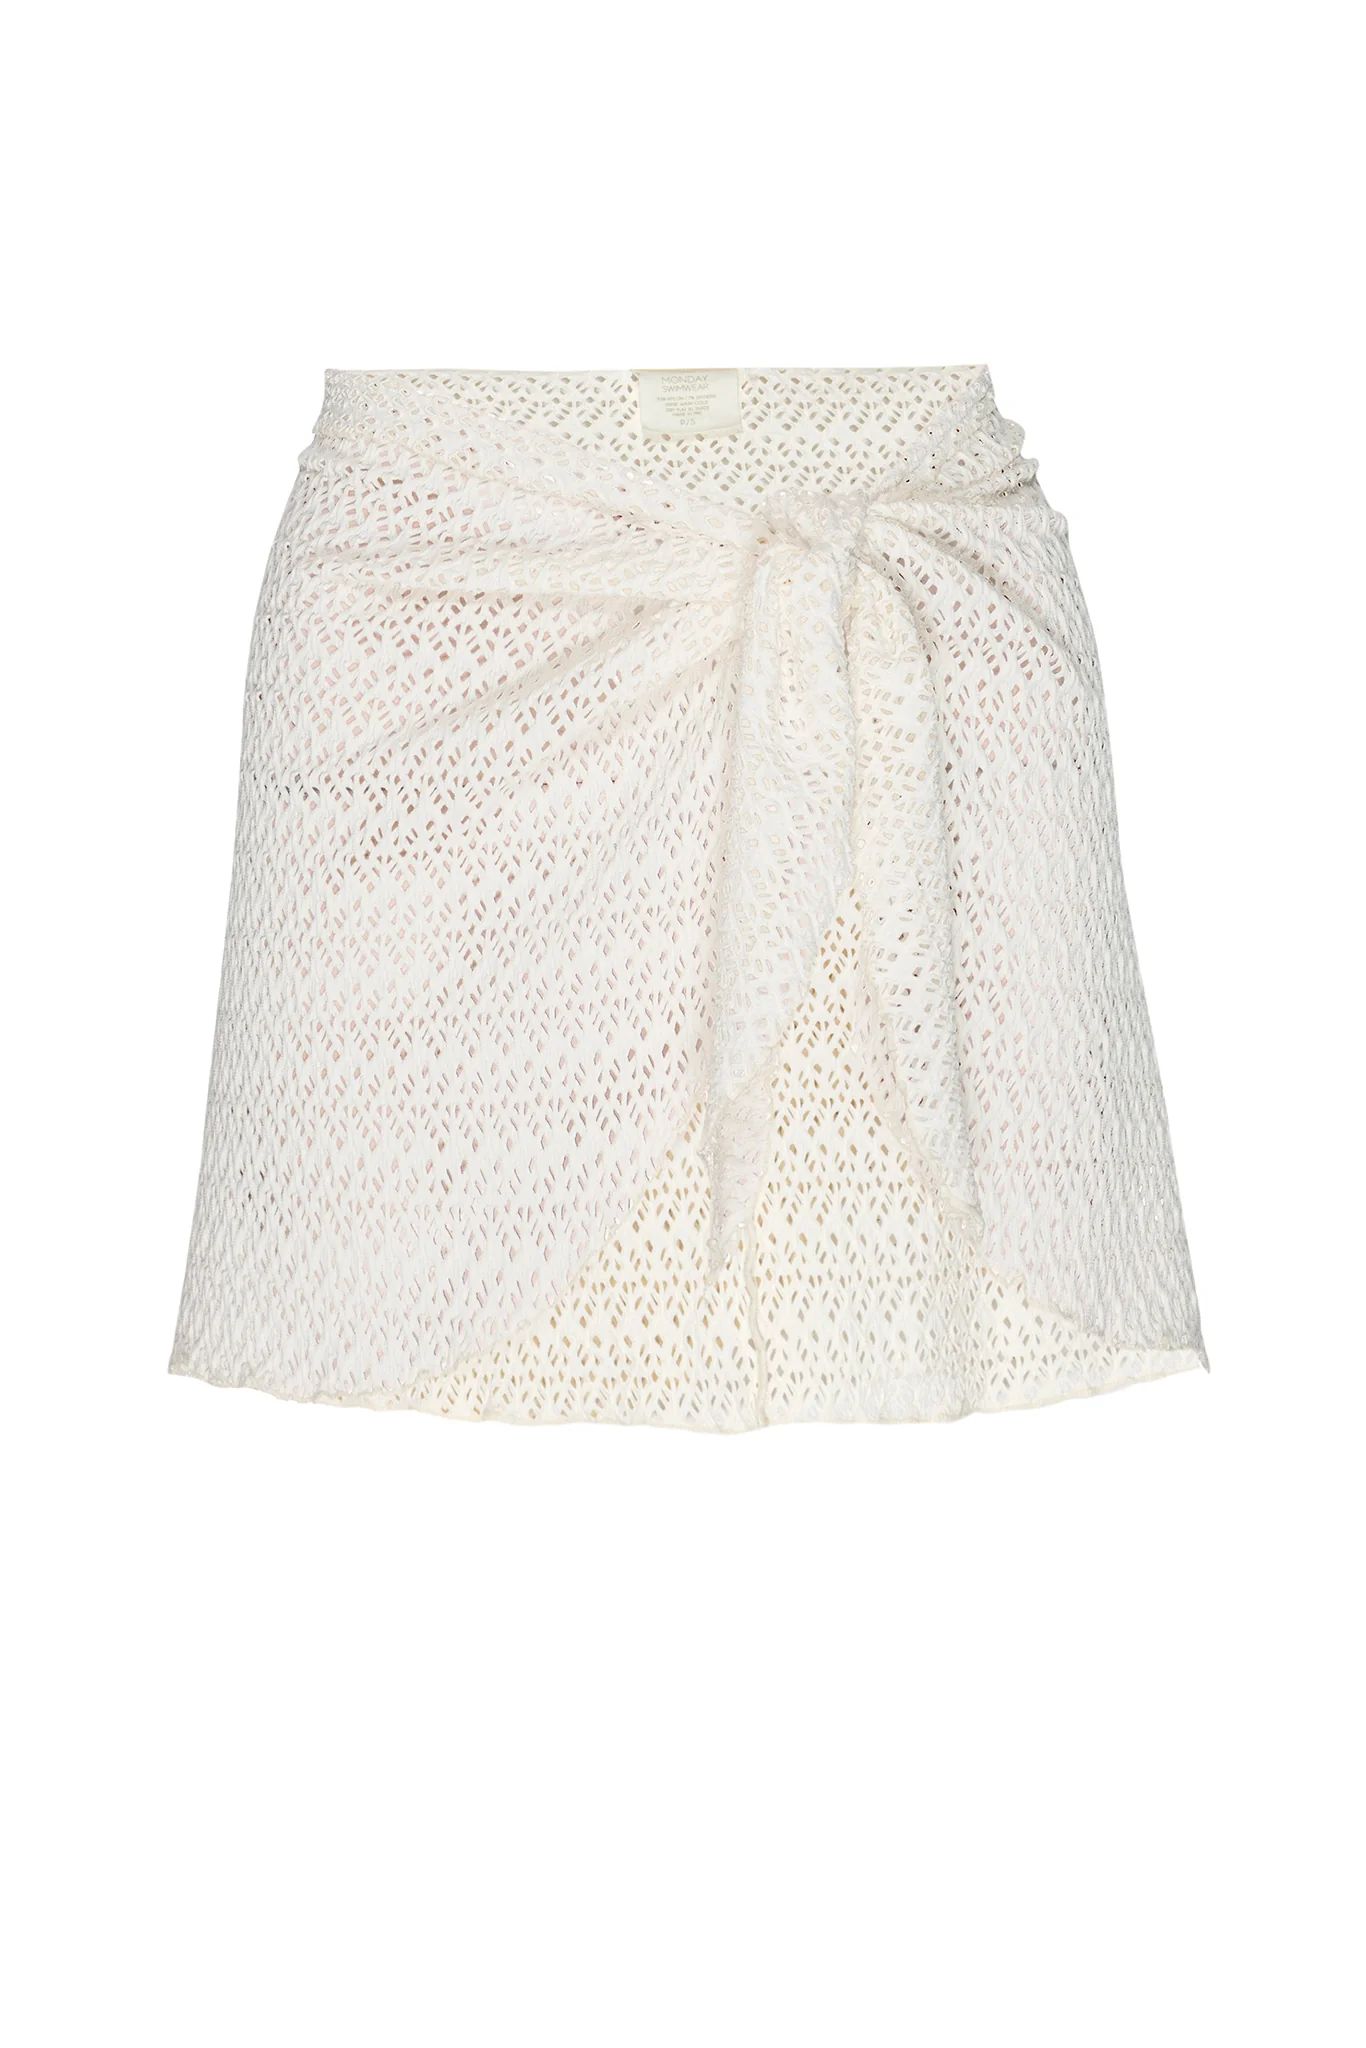 St. Barth's Skirt - Ivory Crochet | Monday Swimwear